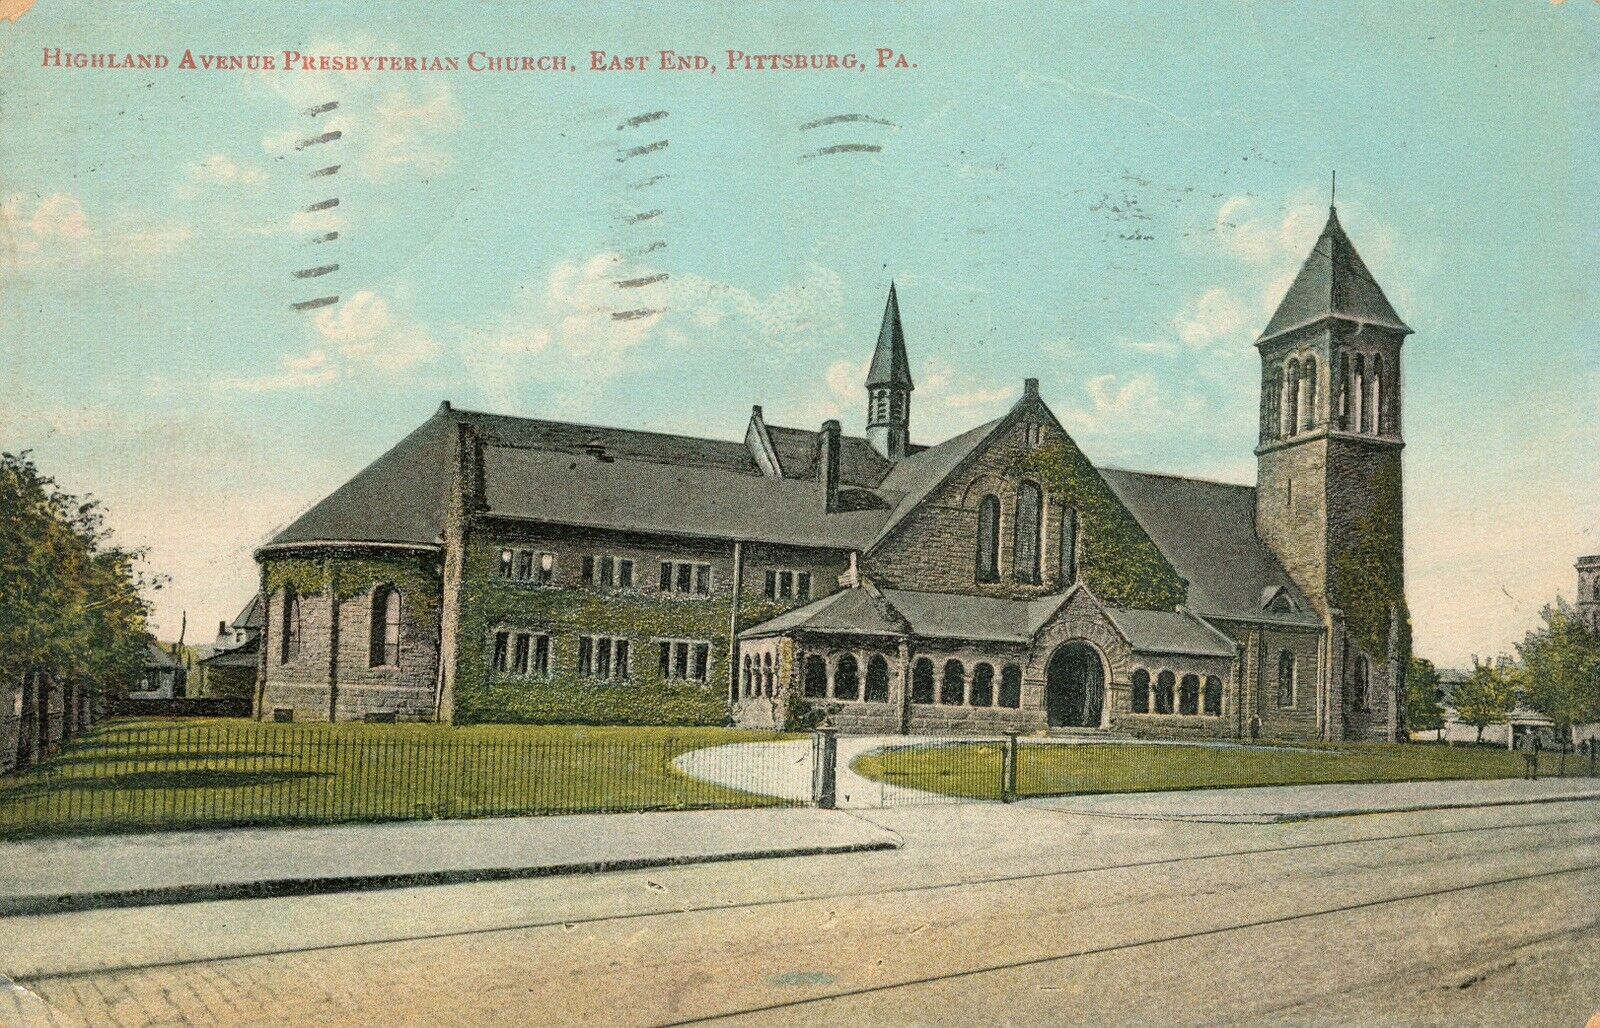 EAST END, PITTSBURG,PA Highland Ave PRESBYTERIAN CHURCH 1908 Antique POSTCARD